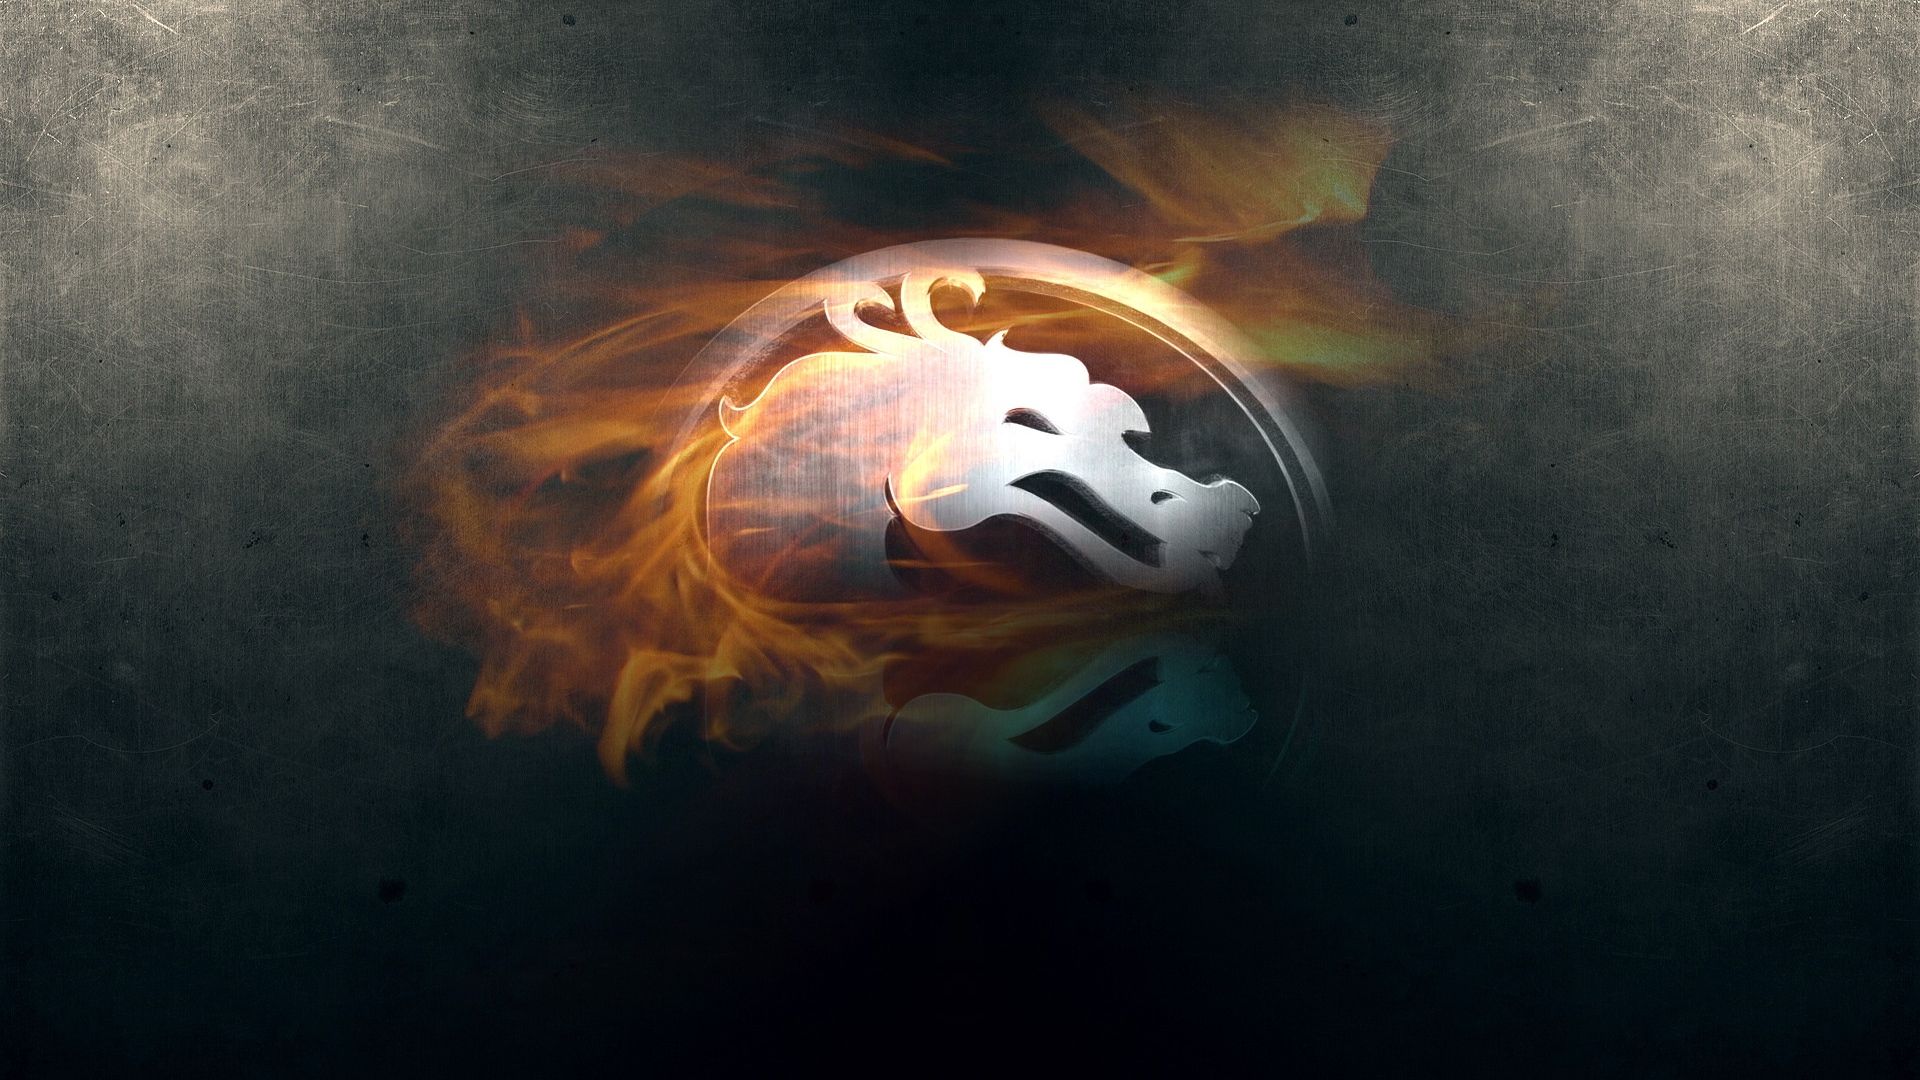 Charming Mortal Kombat Dragon Fire Background Reflection Wallpaper. Mortal kombat, Mortal kombat legacy, Mortal combat